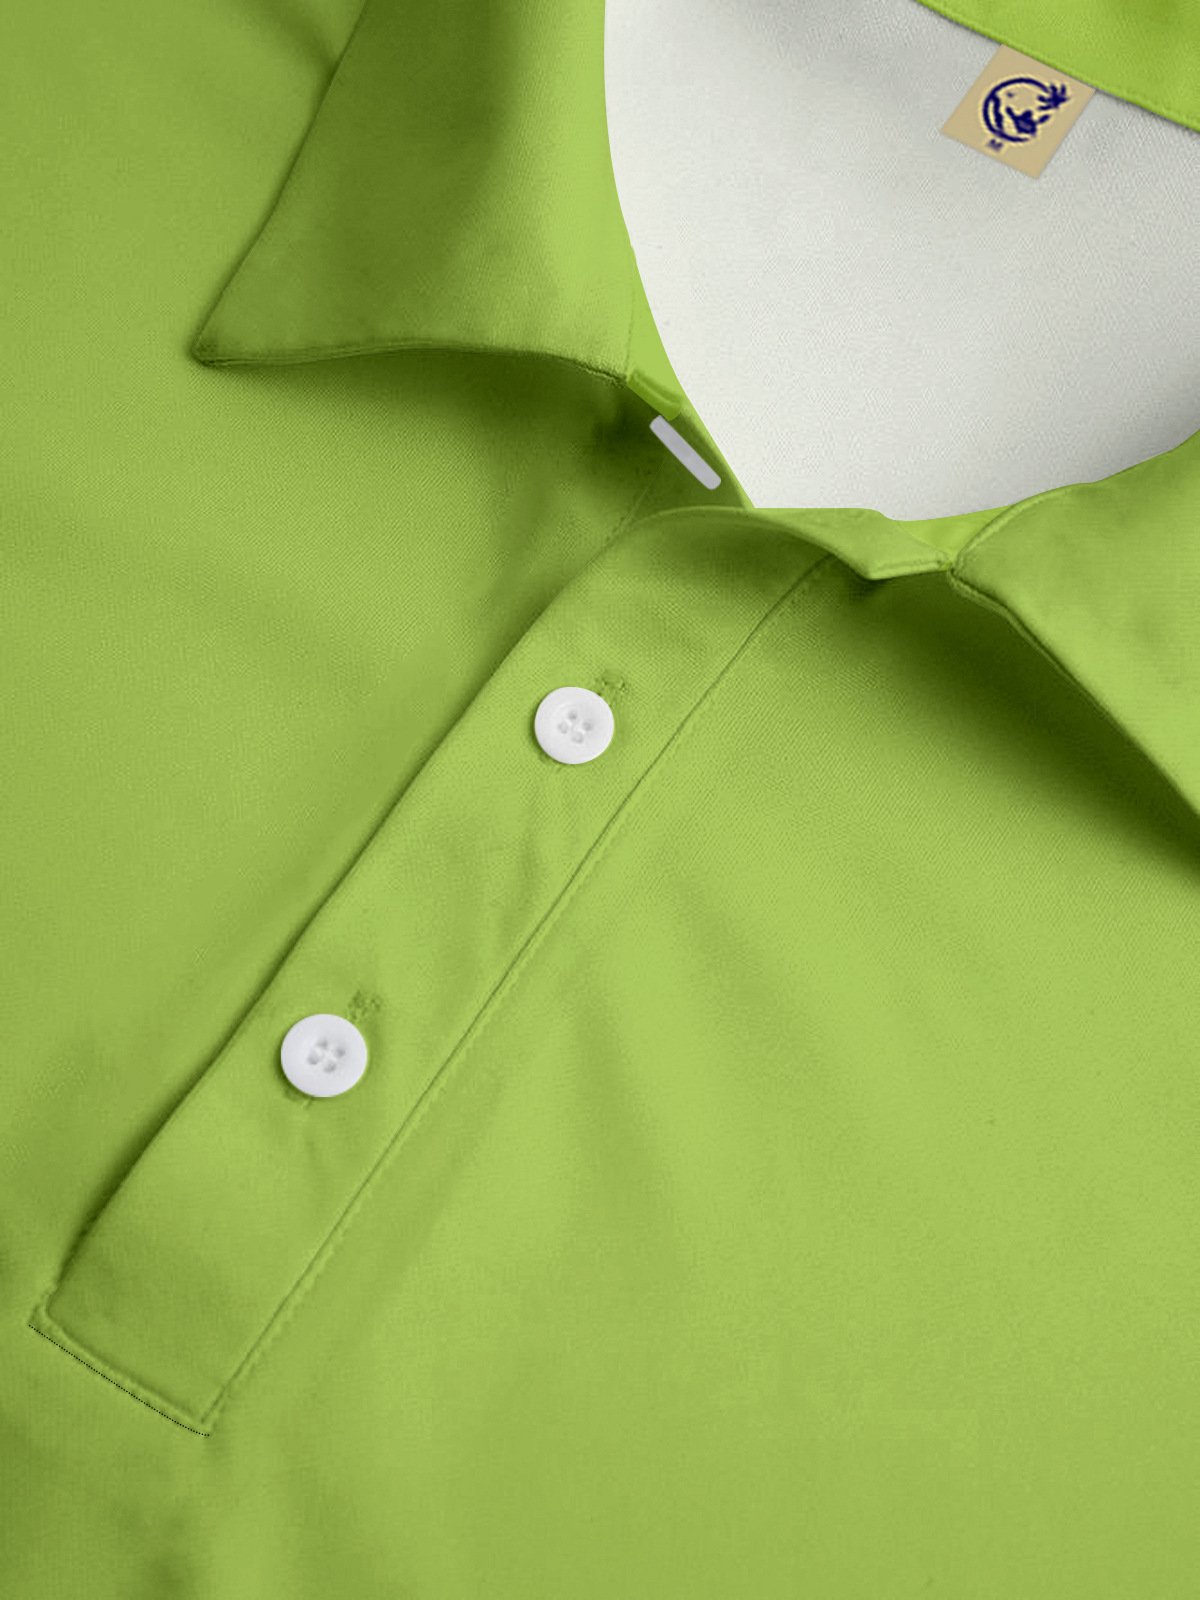 Abstract Geometric Button Short Sleeve Golf Polo Shirt